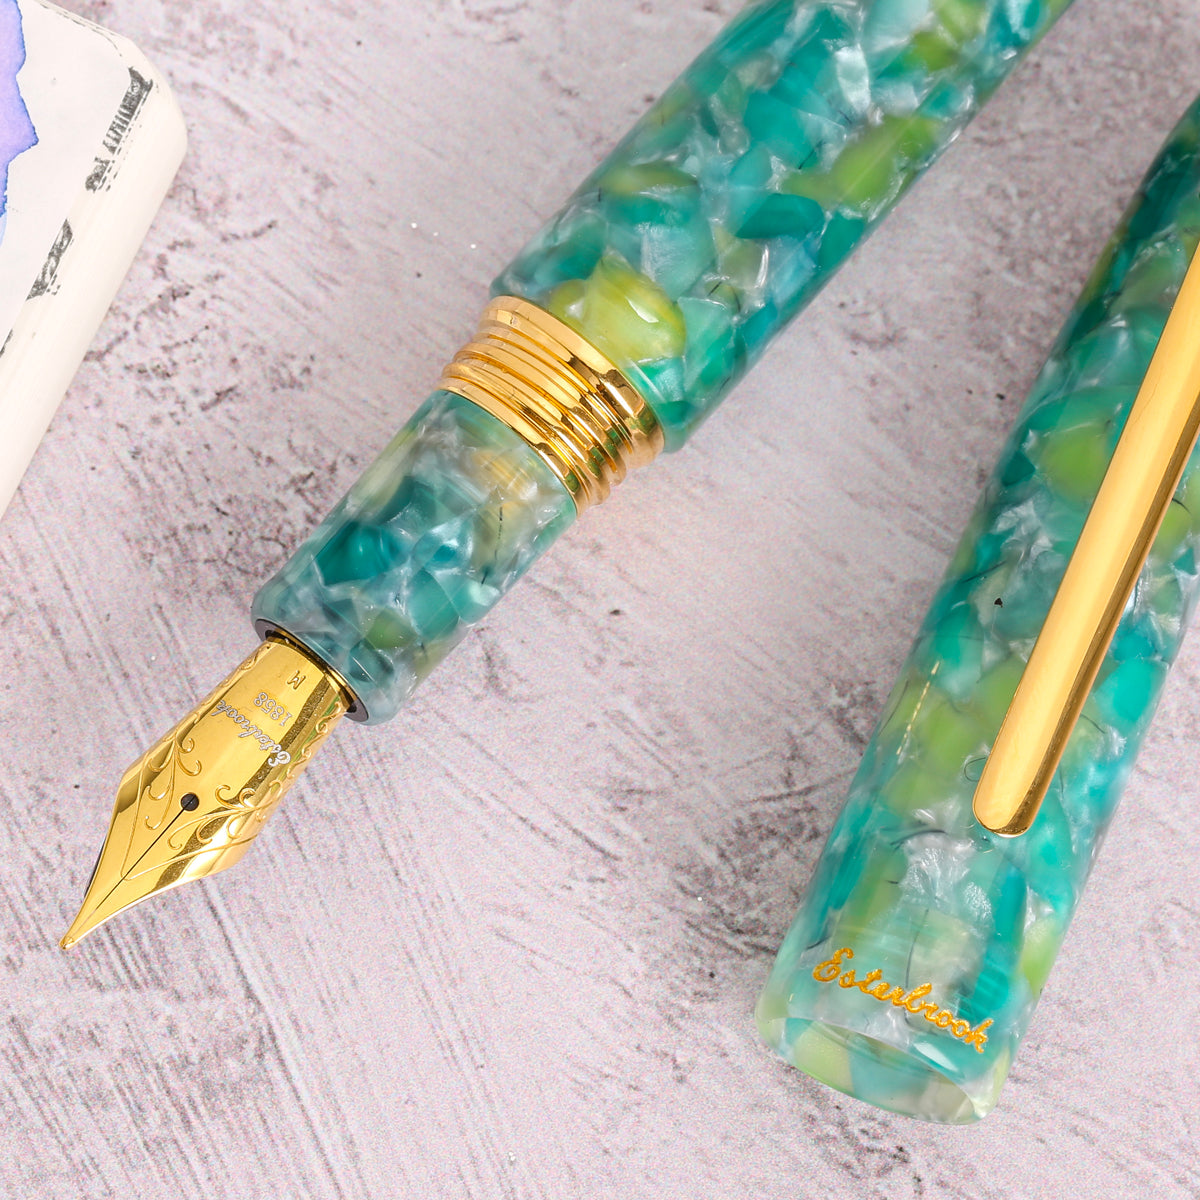 Sea Glass Collection Regular Size FP Gold Trim - Custom Scribe Nib